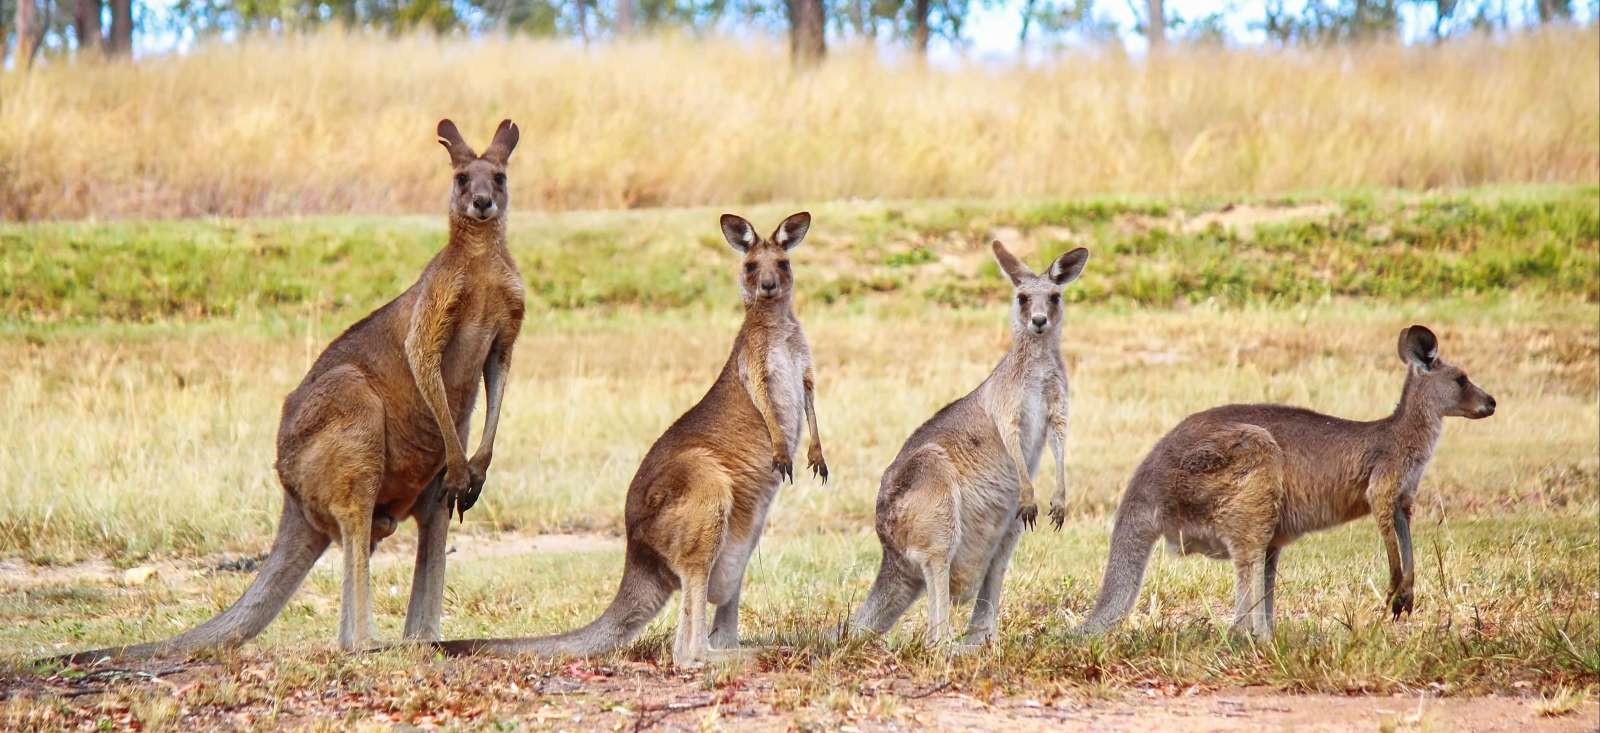 Voyage roadtrip - Au pays des kangourous en famille